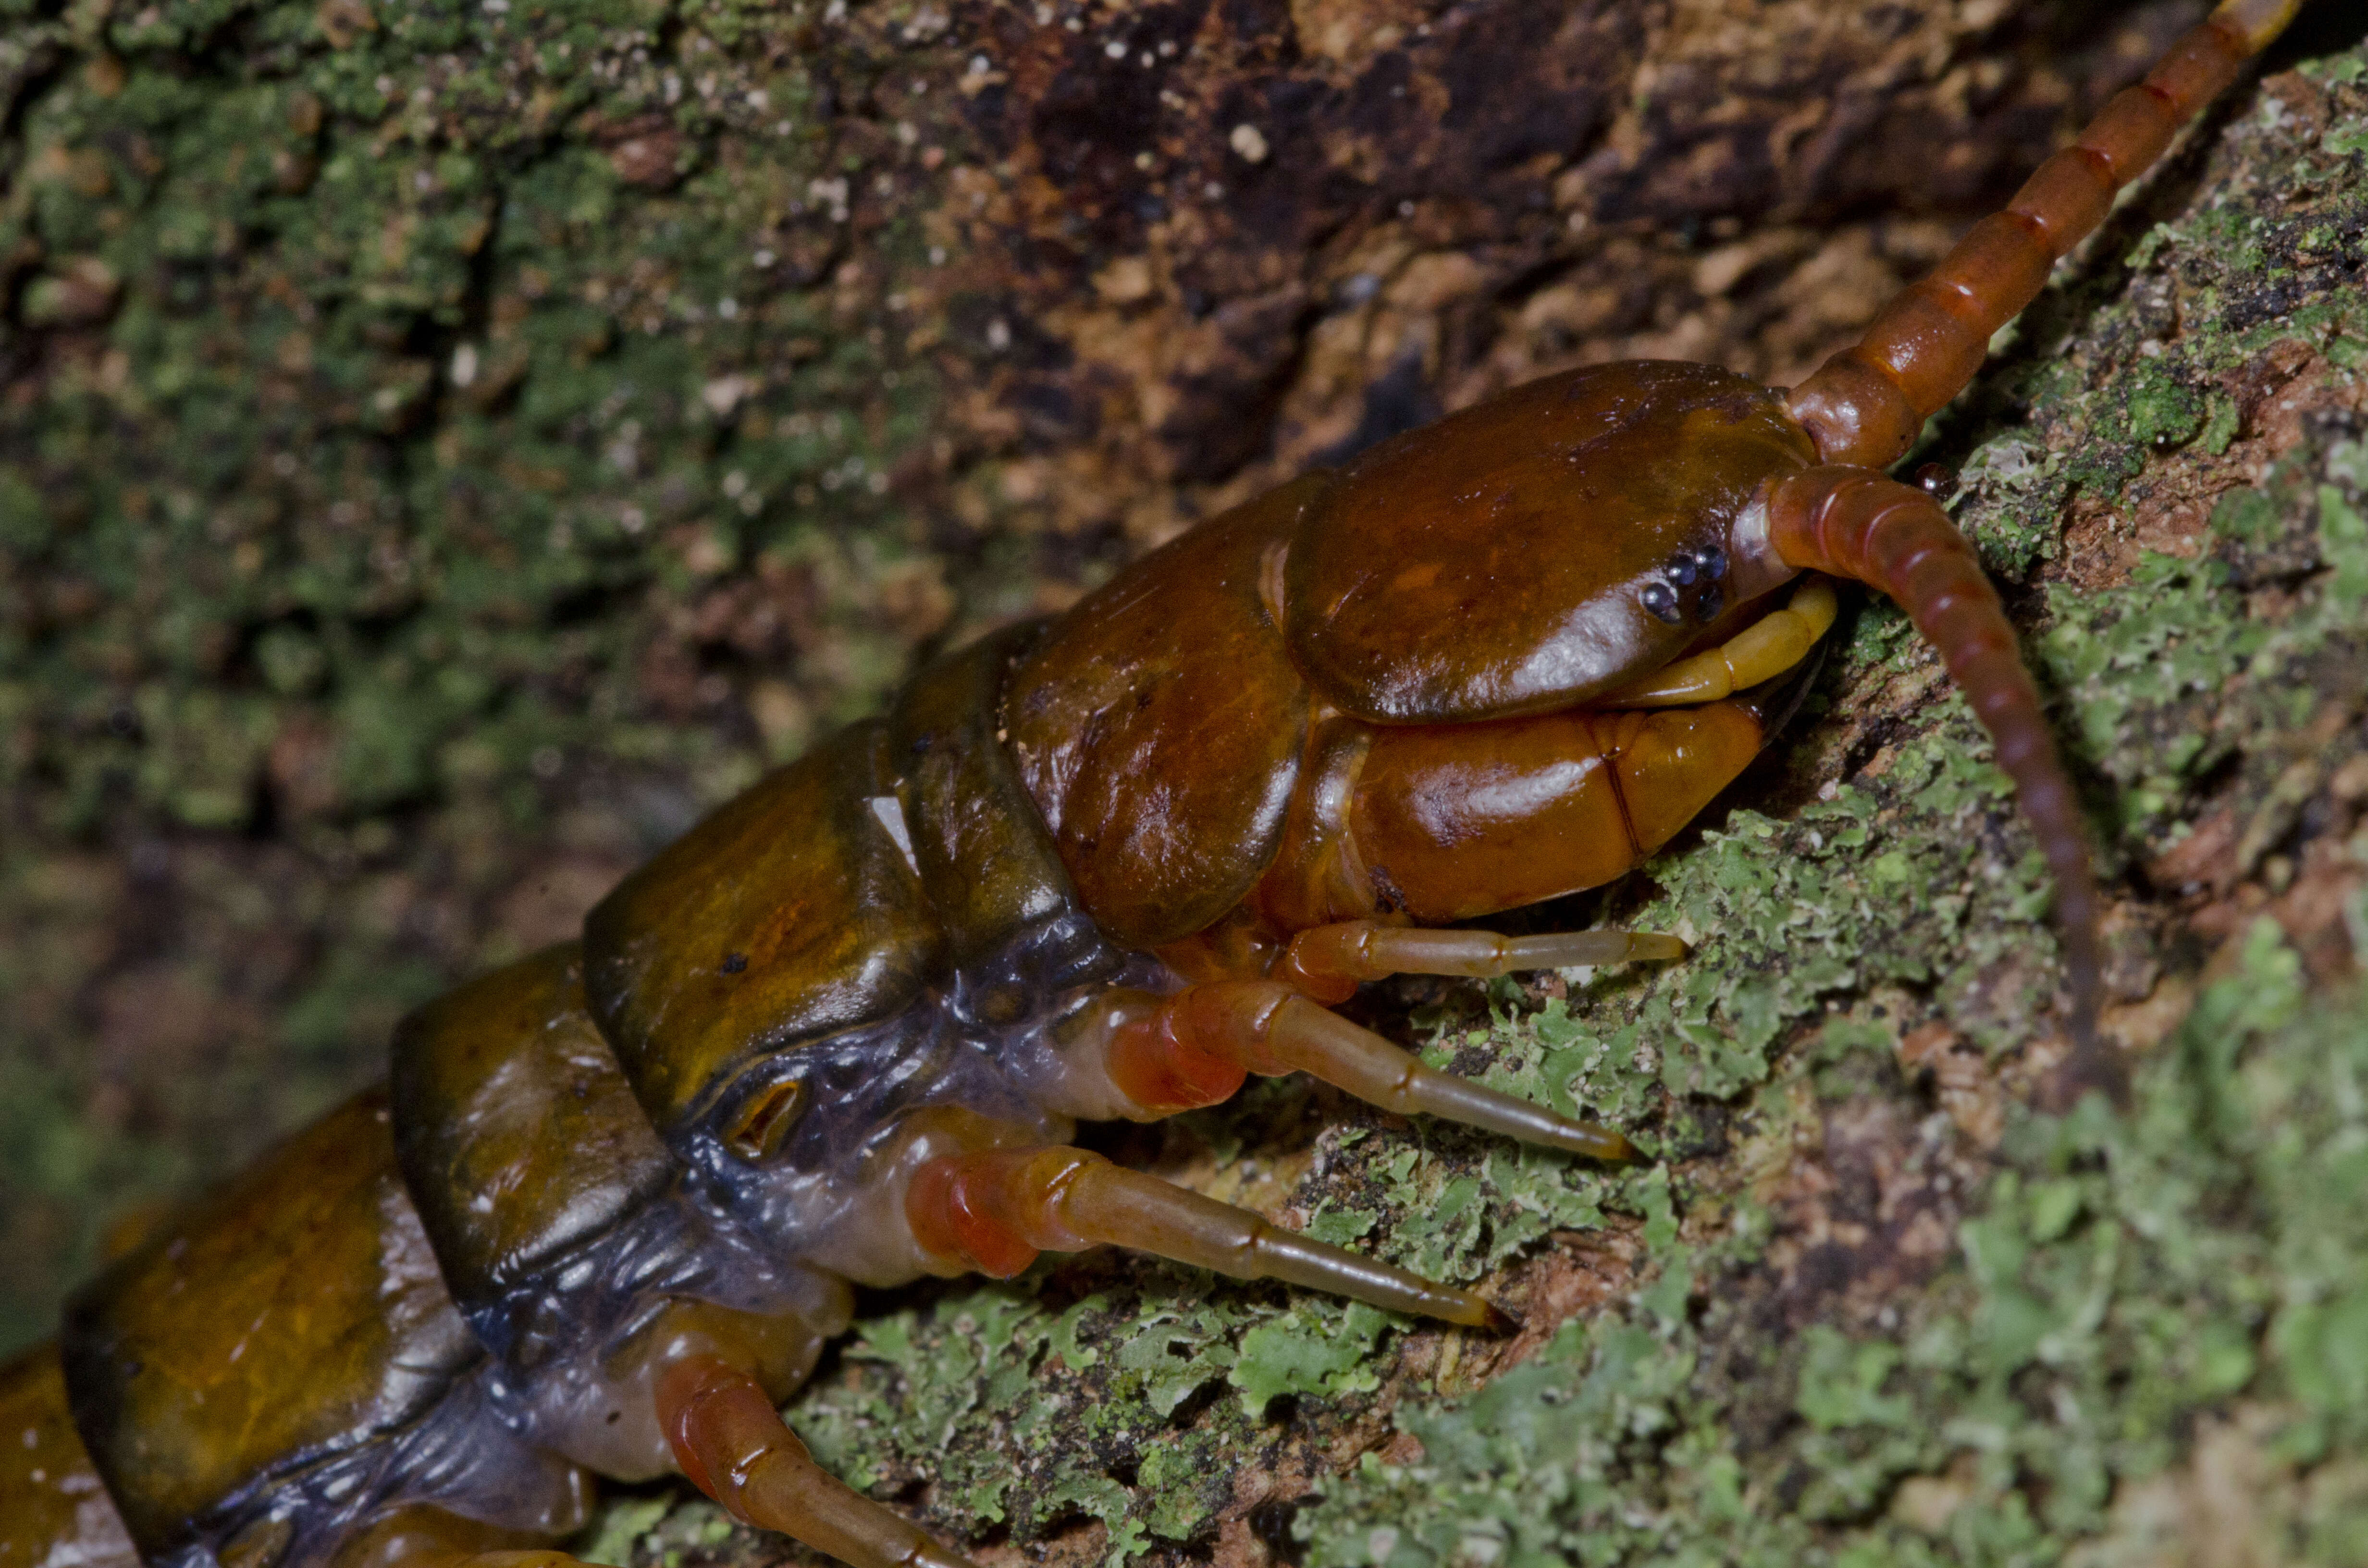 Image of Centipede